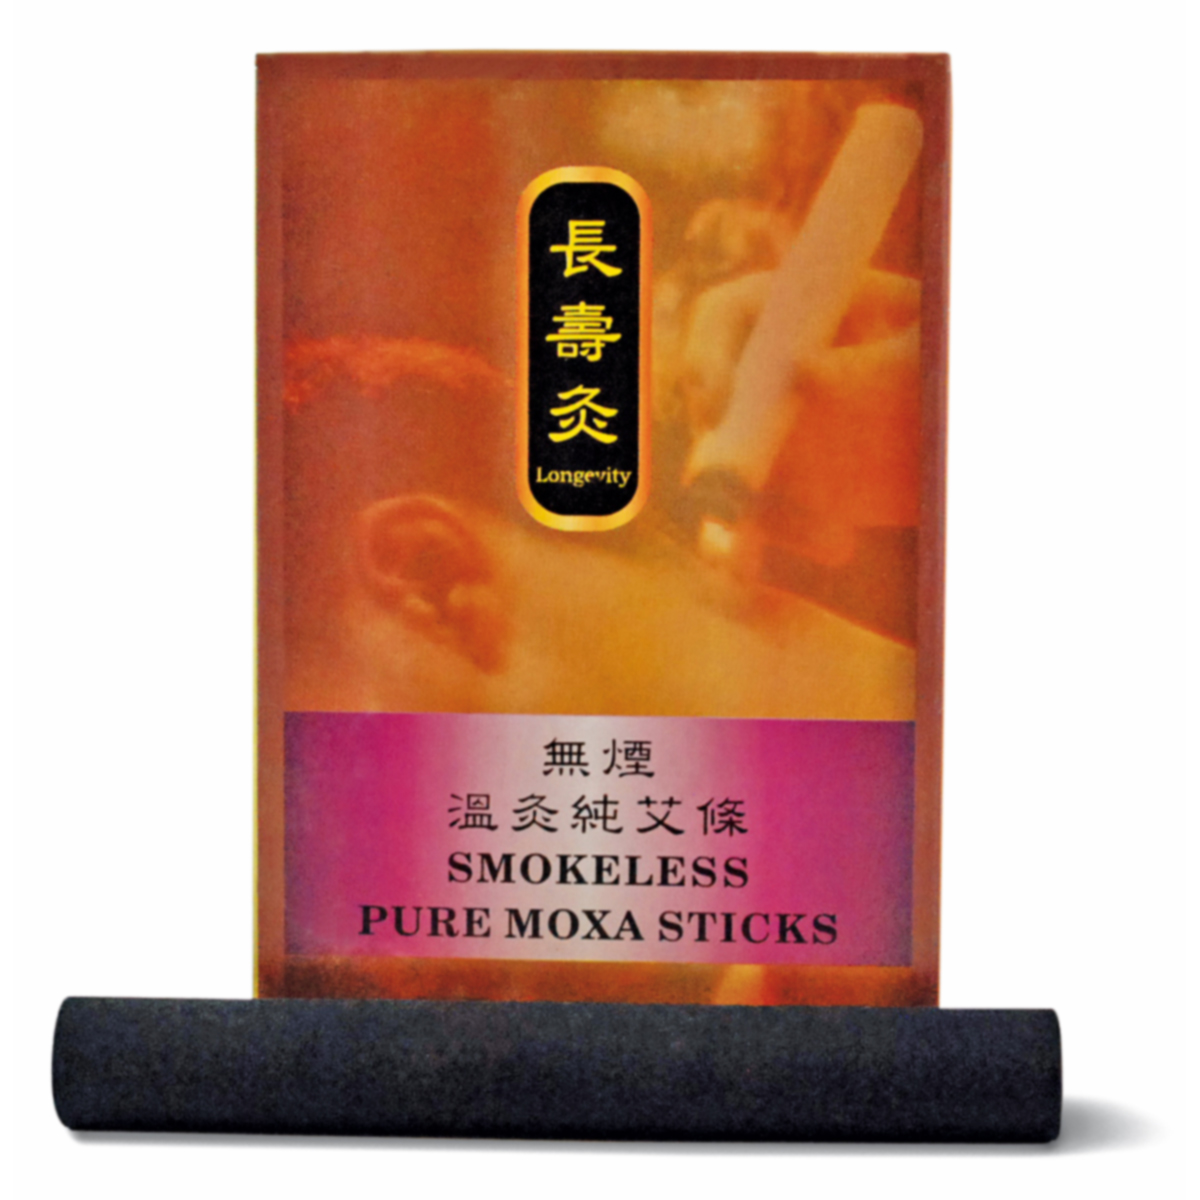 Rouleau de moxa perforé peu fumigène, 5 pièces par paquet - 1015600 -  Dongbang - BN2020 - Moxibustion - 3B Scientific